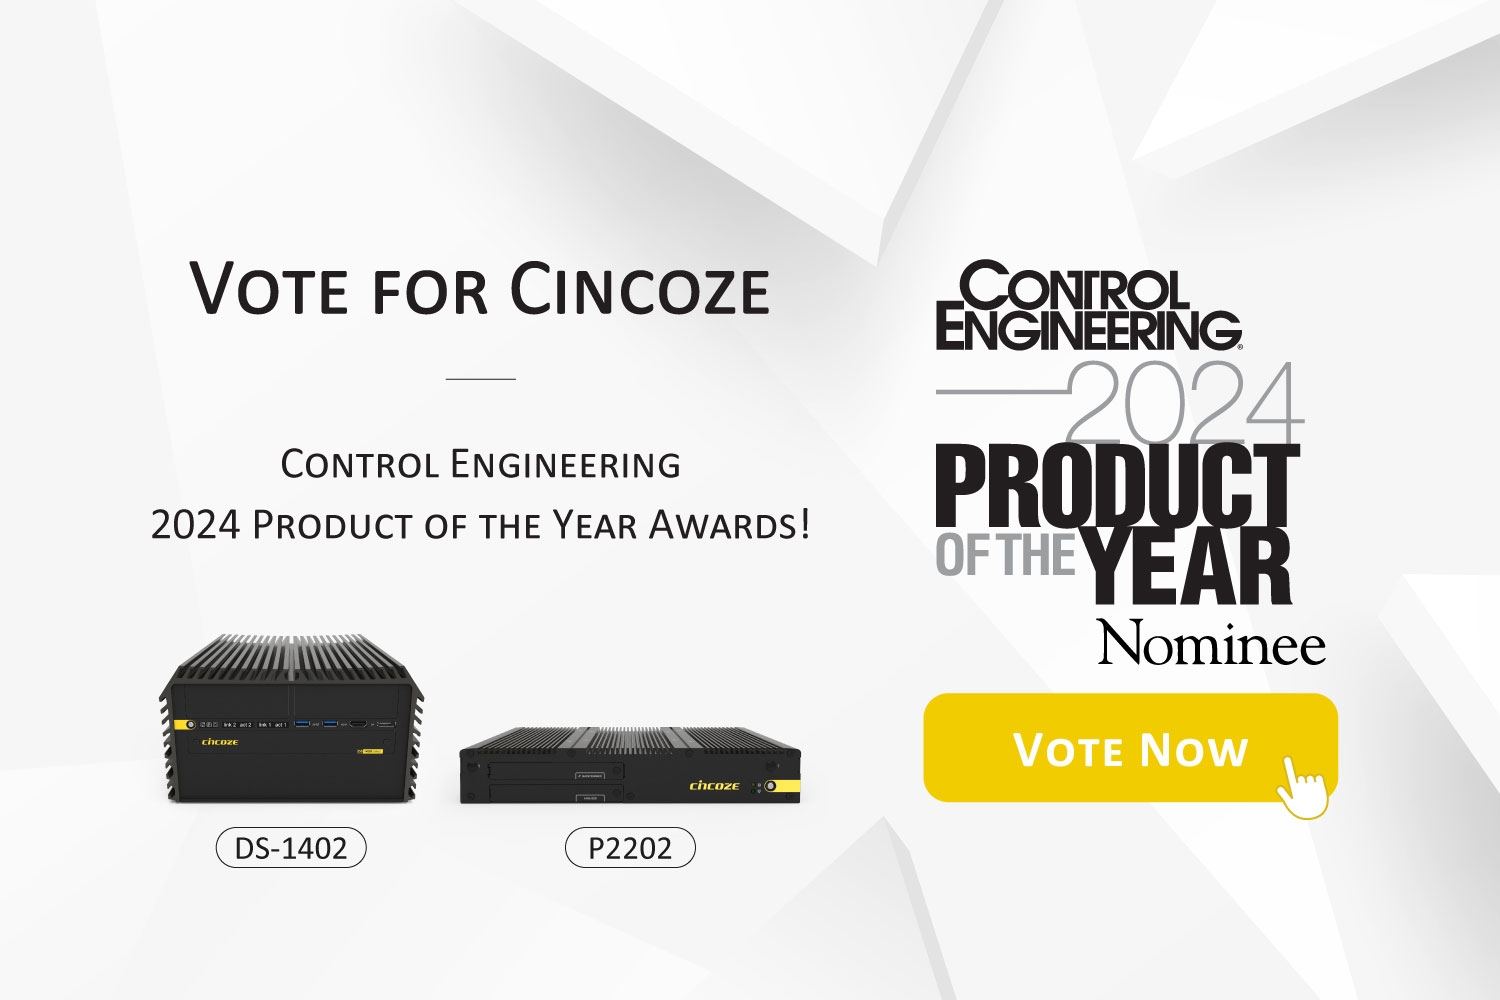 請投票支持 Cincoze DS-1402 與 P2202 參加《Control Engineering》2024 年度產品大獎！